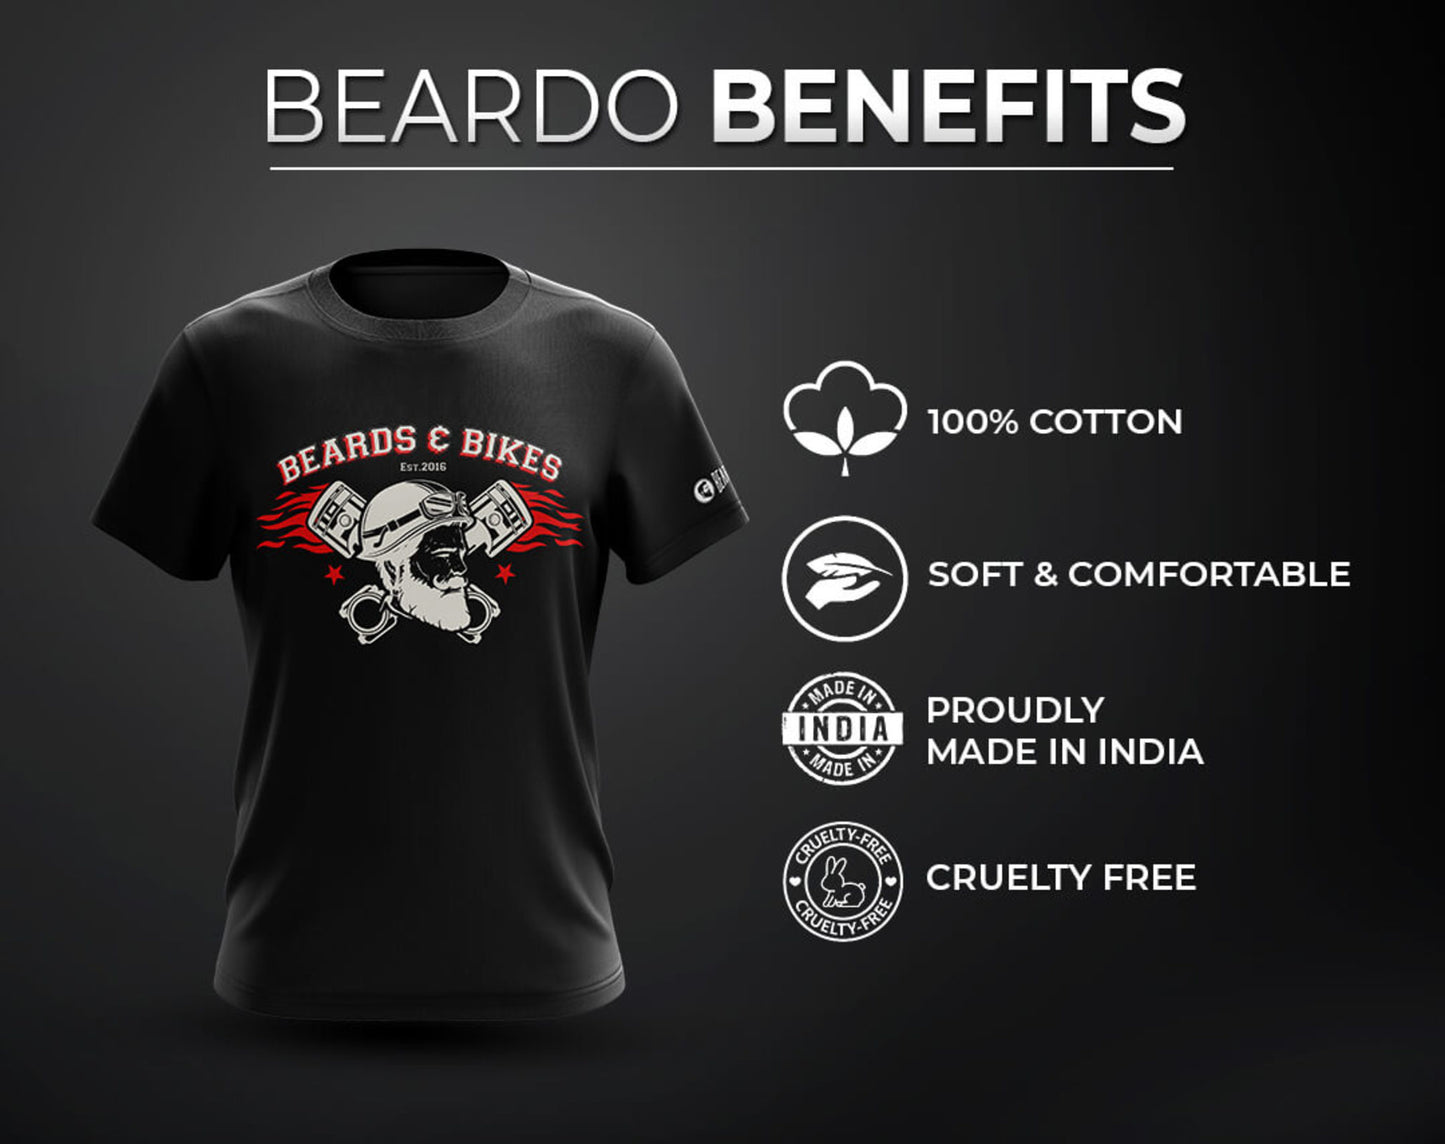 Beardo Beards and Bikes T-shirt